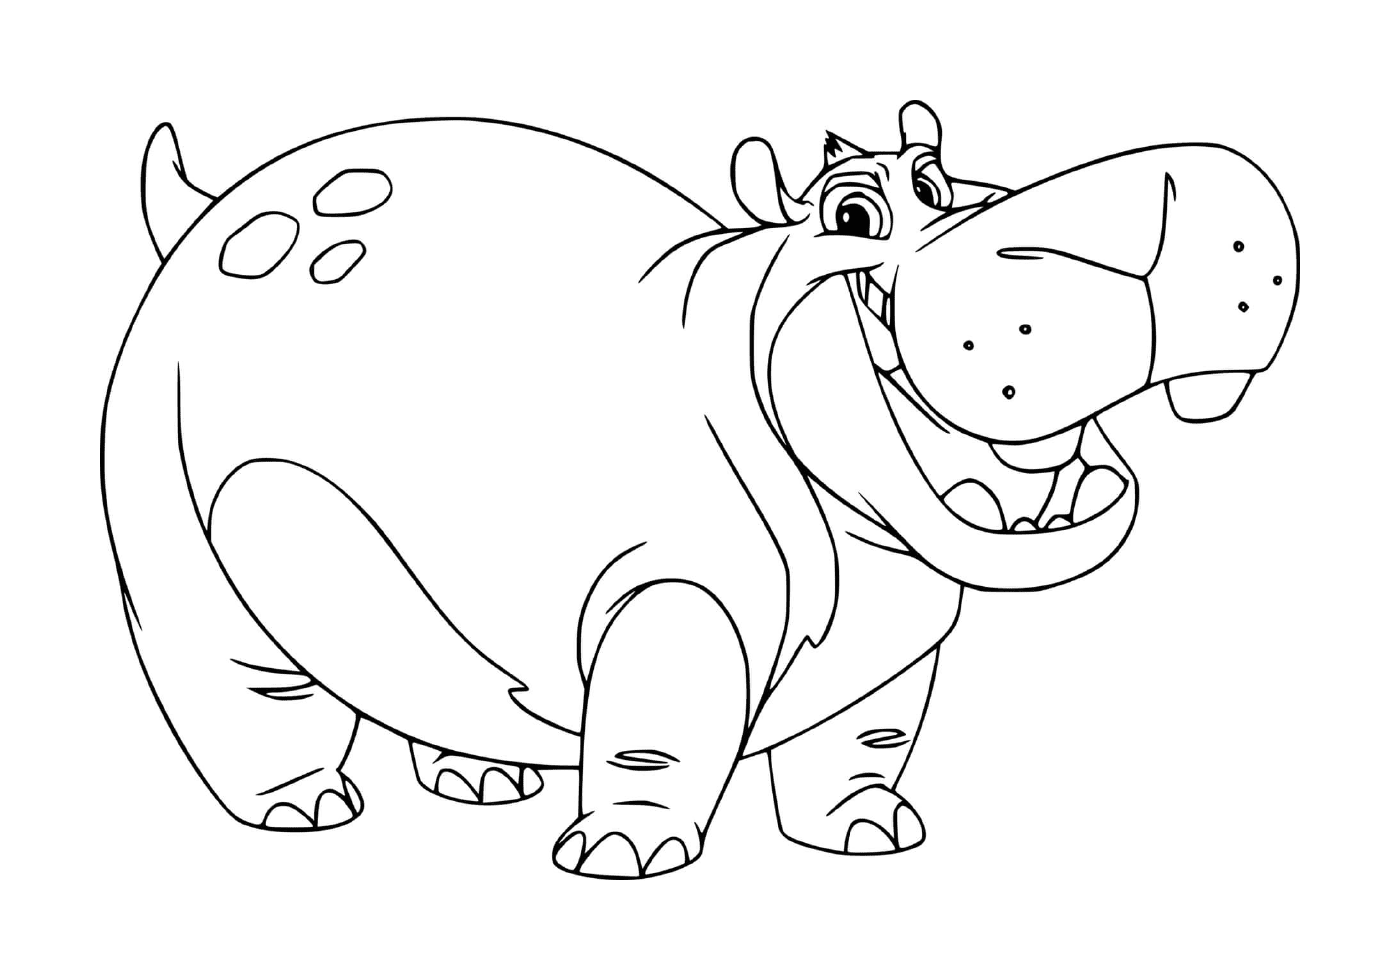  Beshte, the heavy hippopotamus 